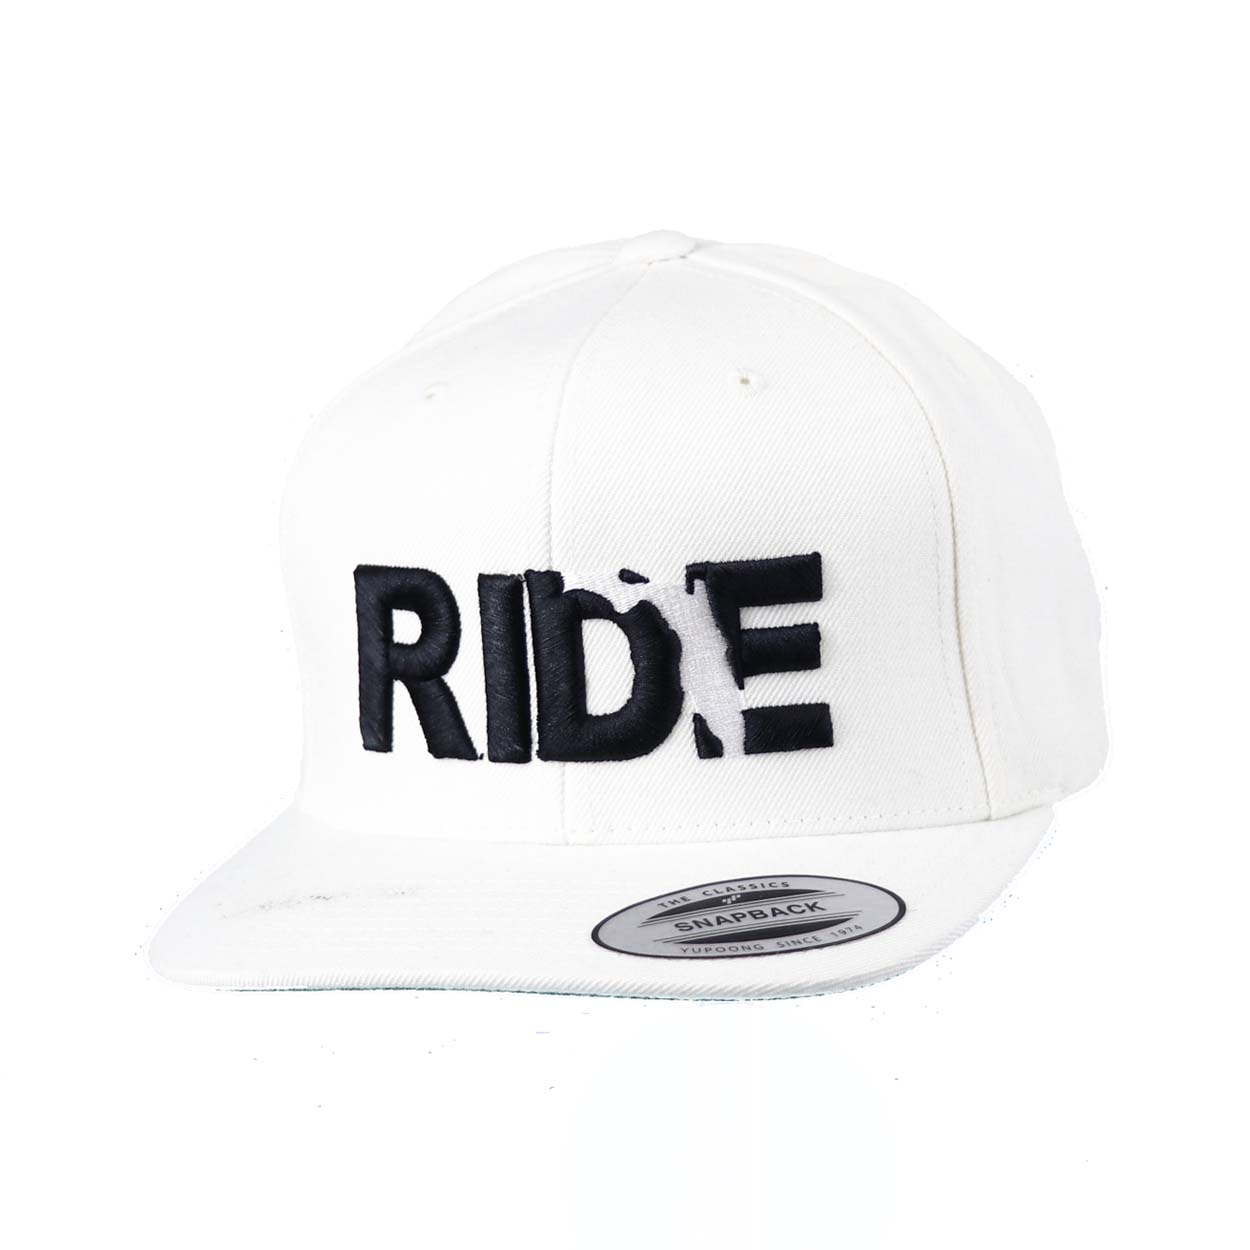 Ride Florida Classic Embroidered Snapback Flat Brim Hat White/Black